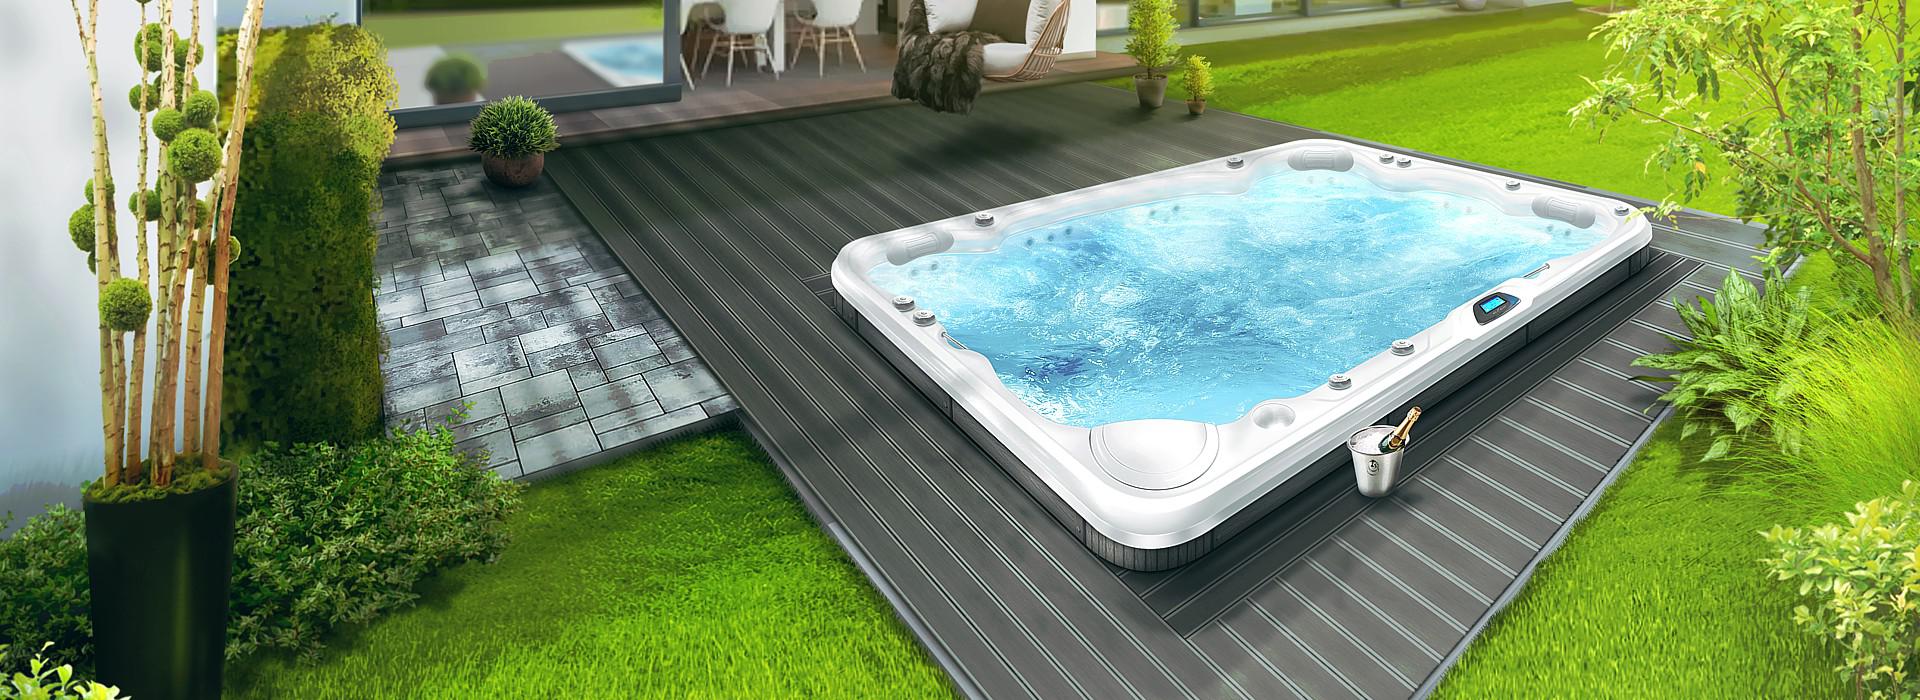 Hot tub outdoor Gladius New, Canadian Spa